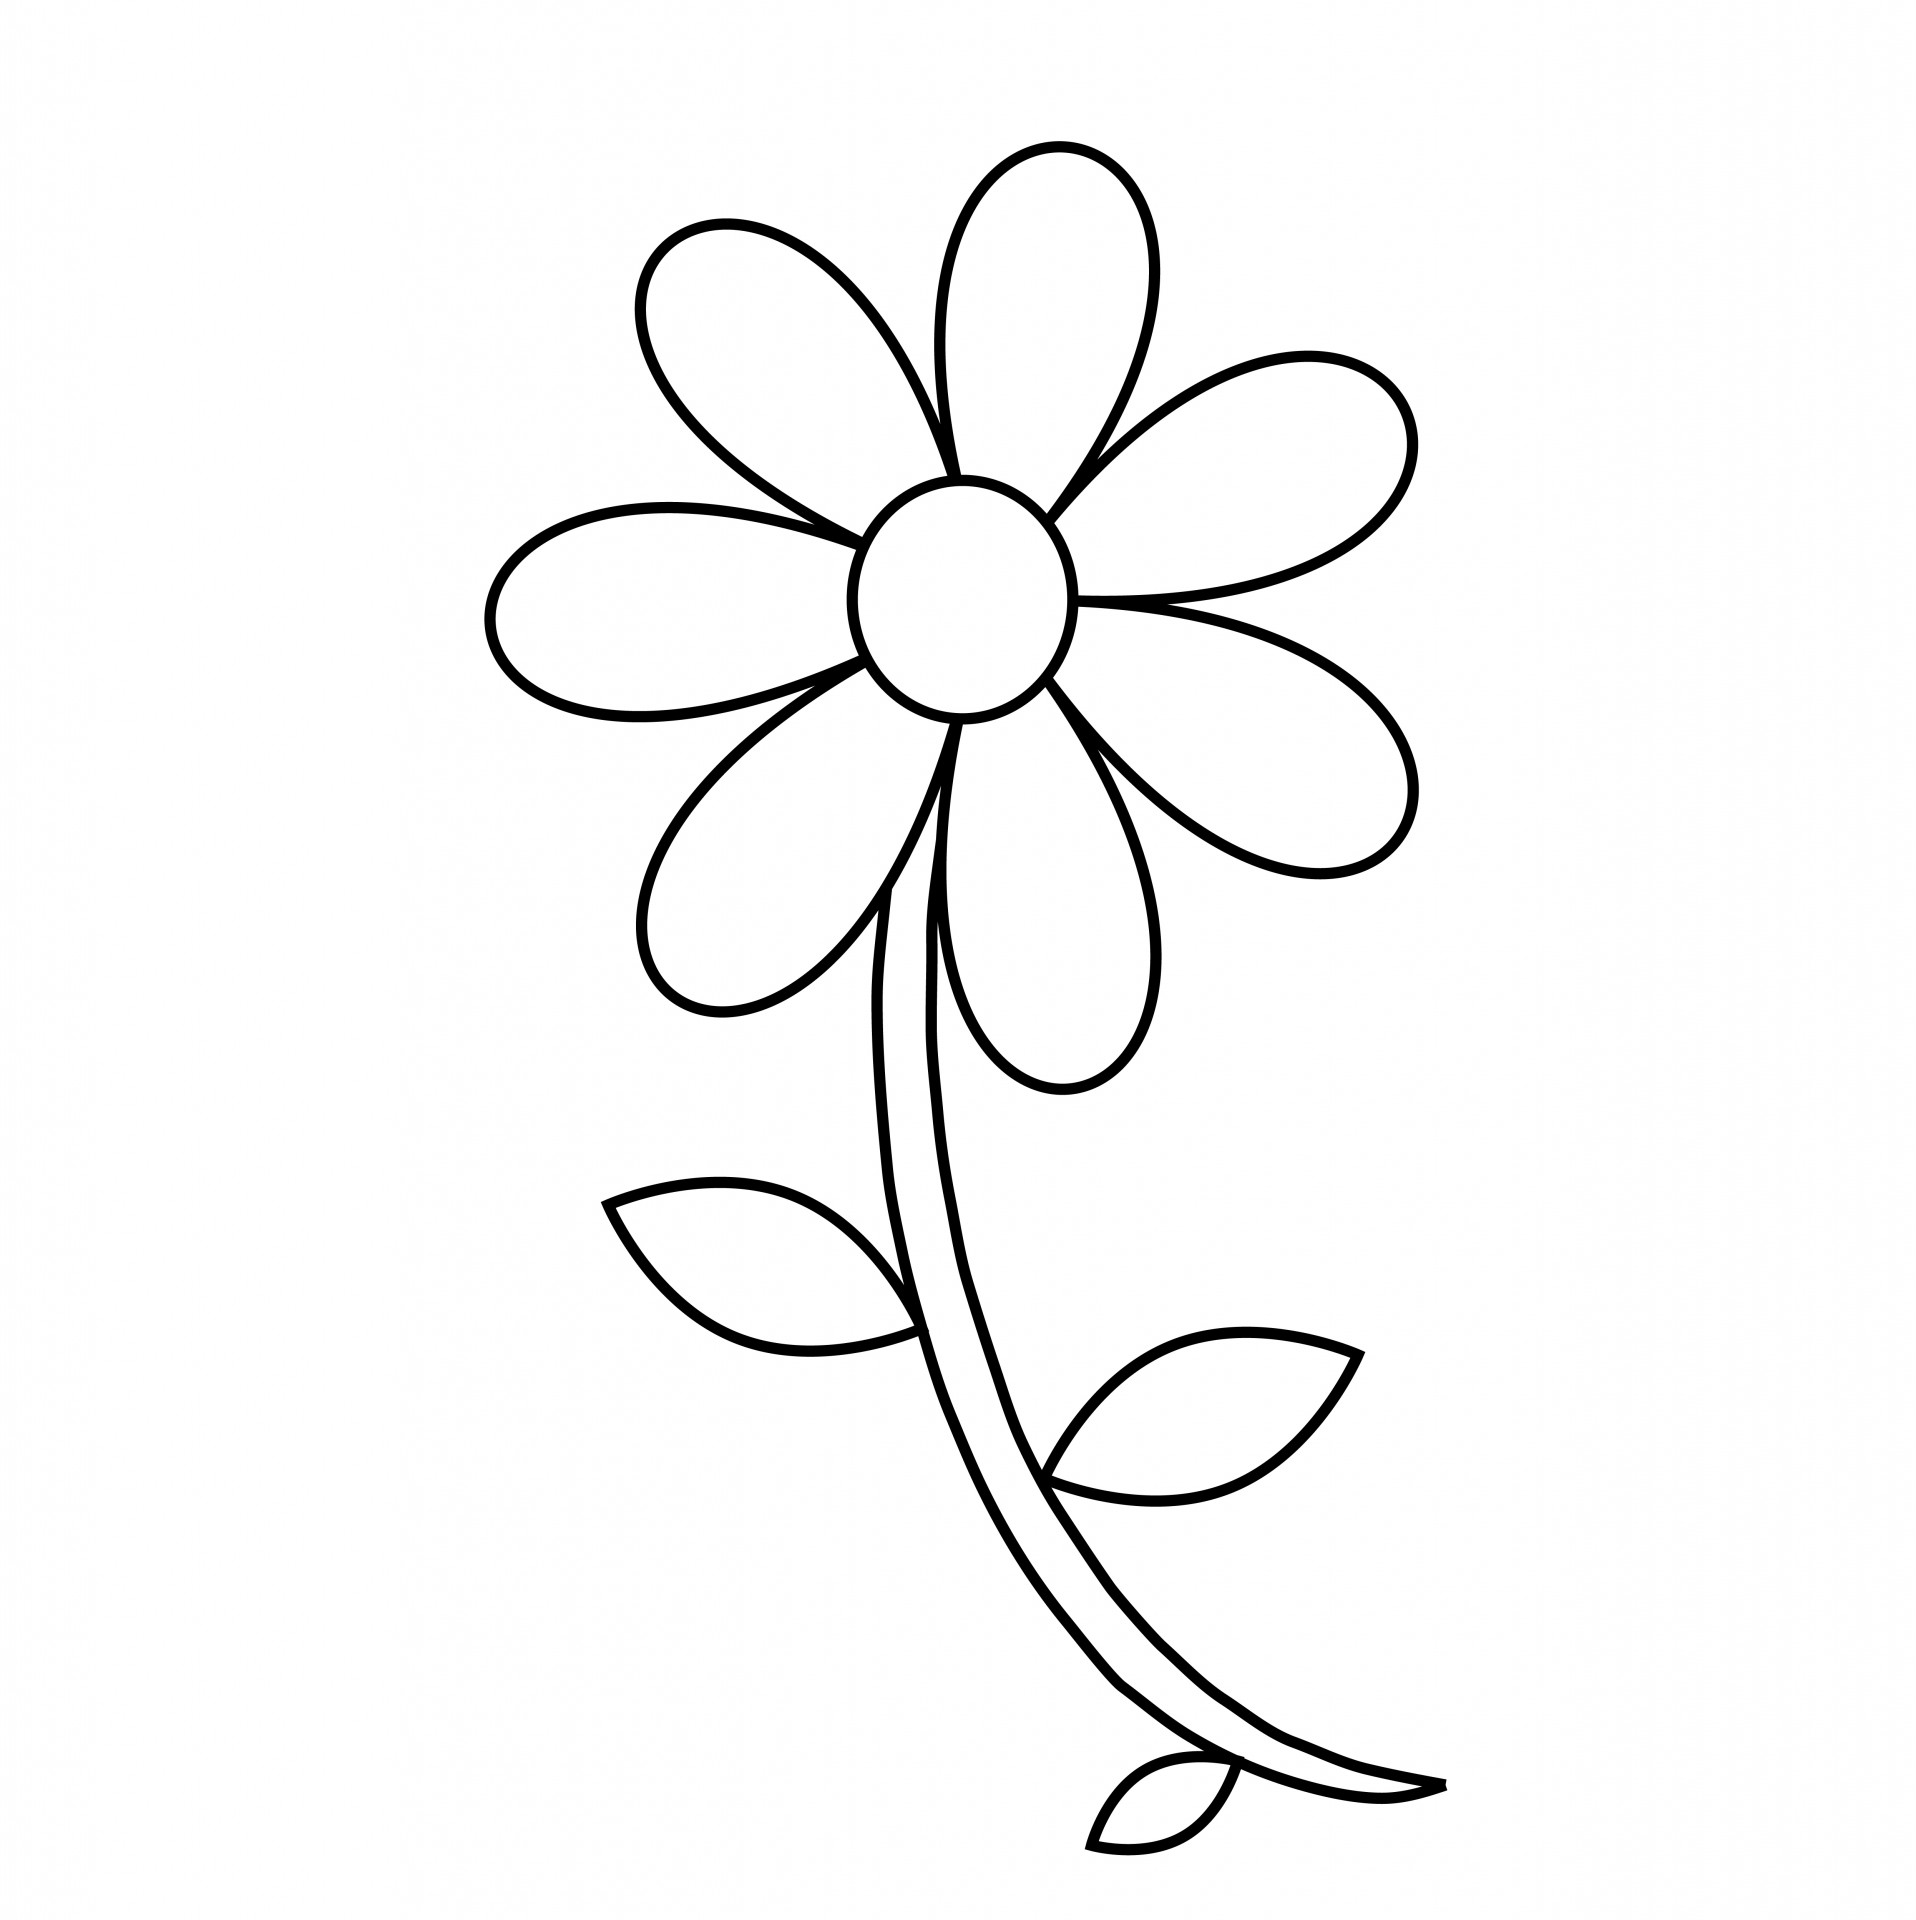 Flowers For > Flower Outline Black And White